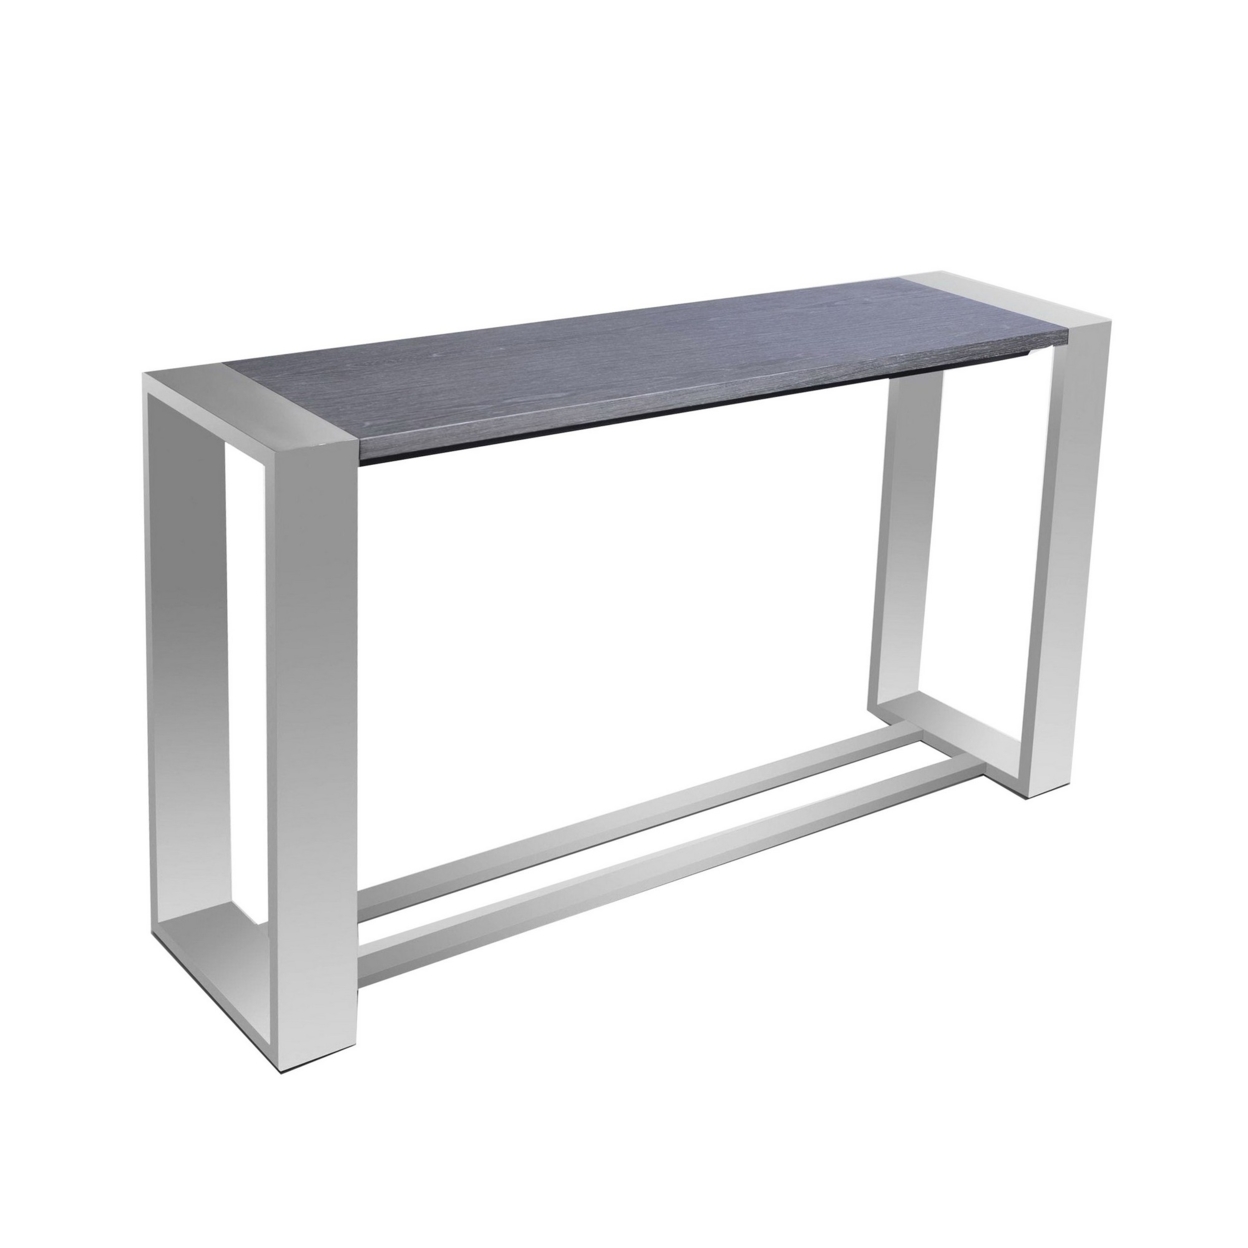 Cid Amy 53 Inch Modern Console Sideboard Table, Chrome Metal, Wood, Gray- Saltoro Sherpi